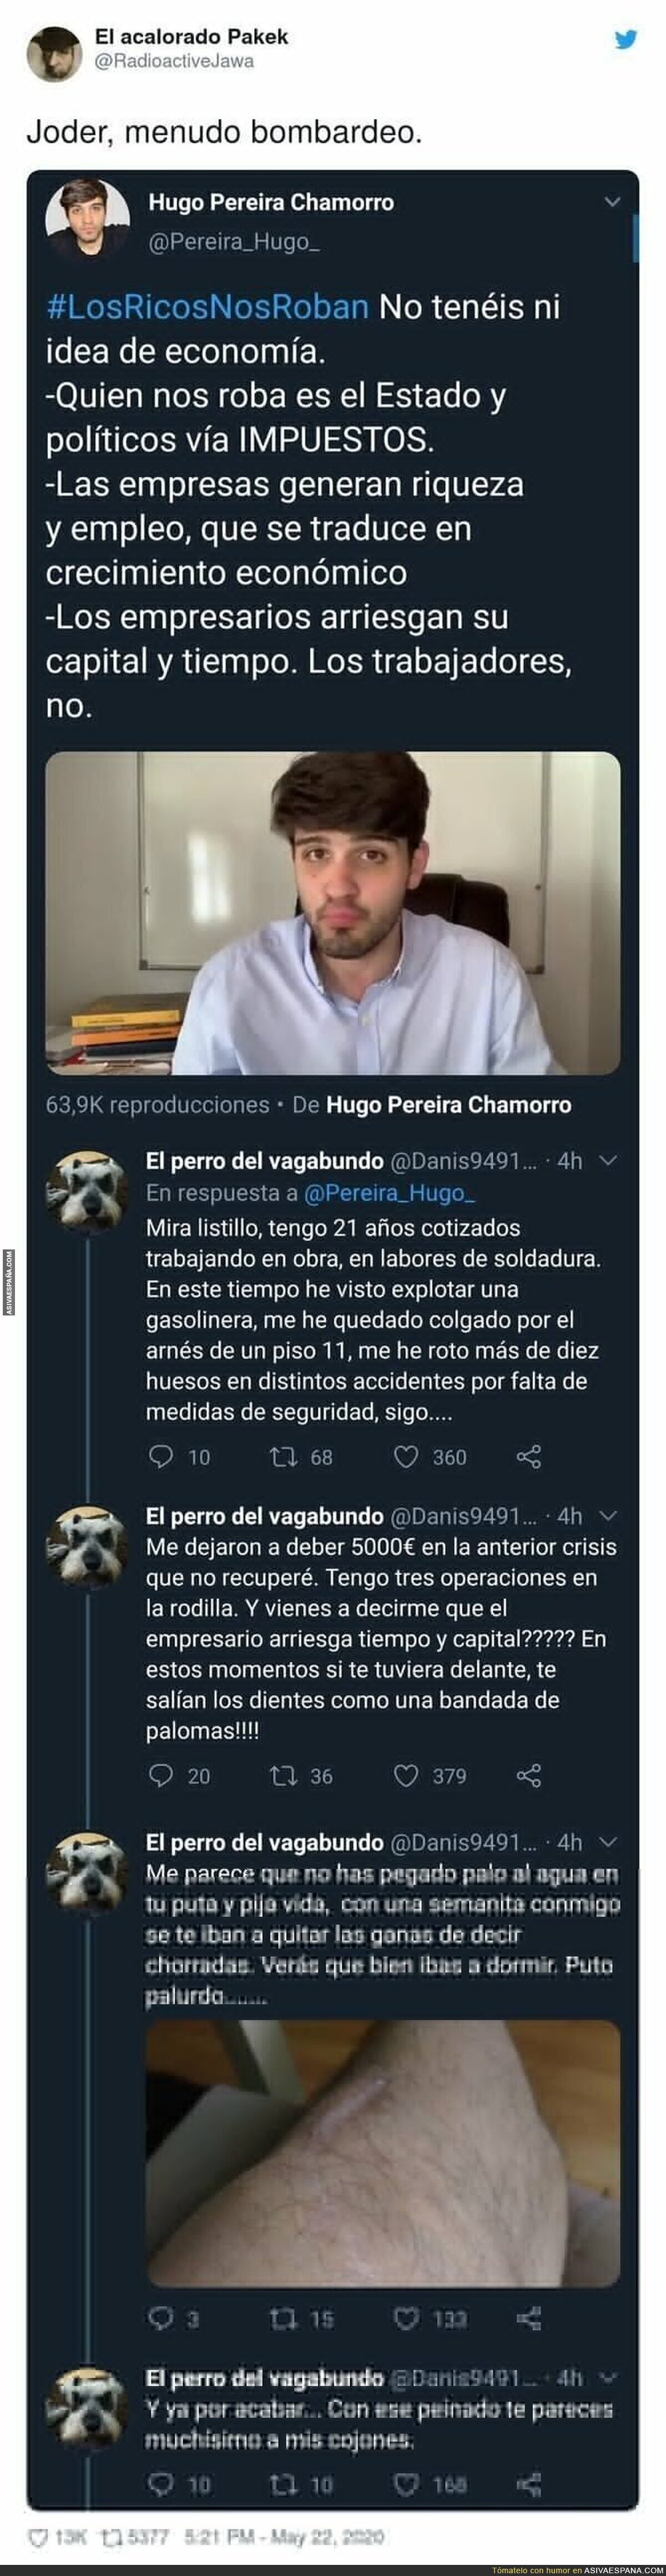 Menudo repaso le dan a Hugo Pereira después de este tuit tan lamentable